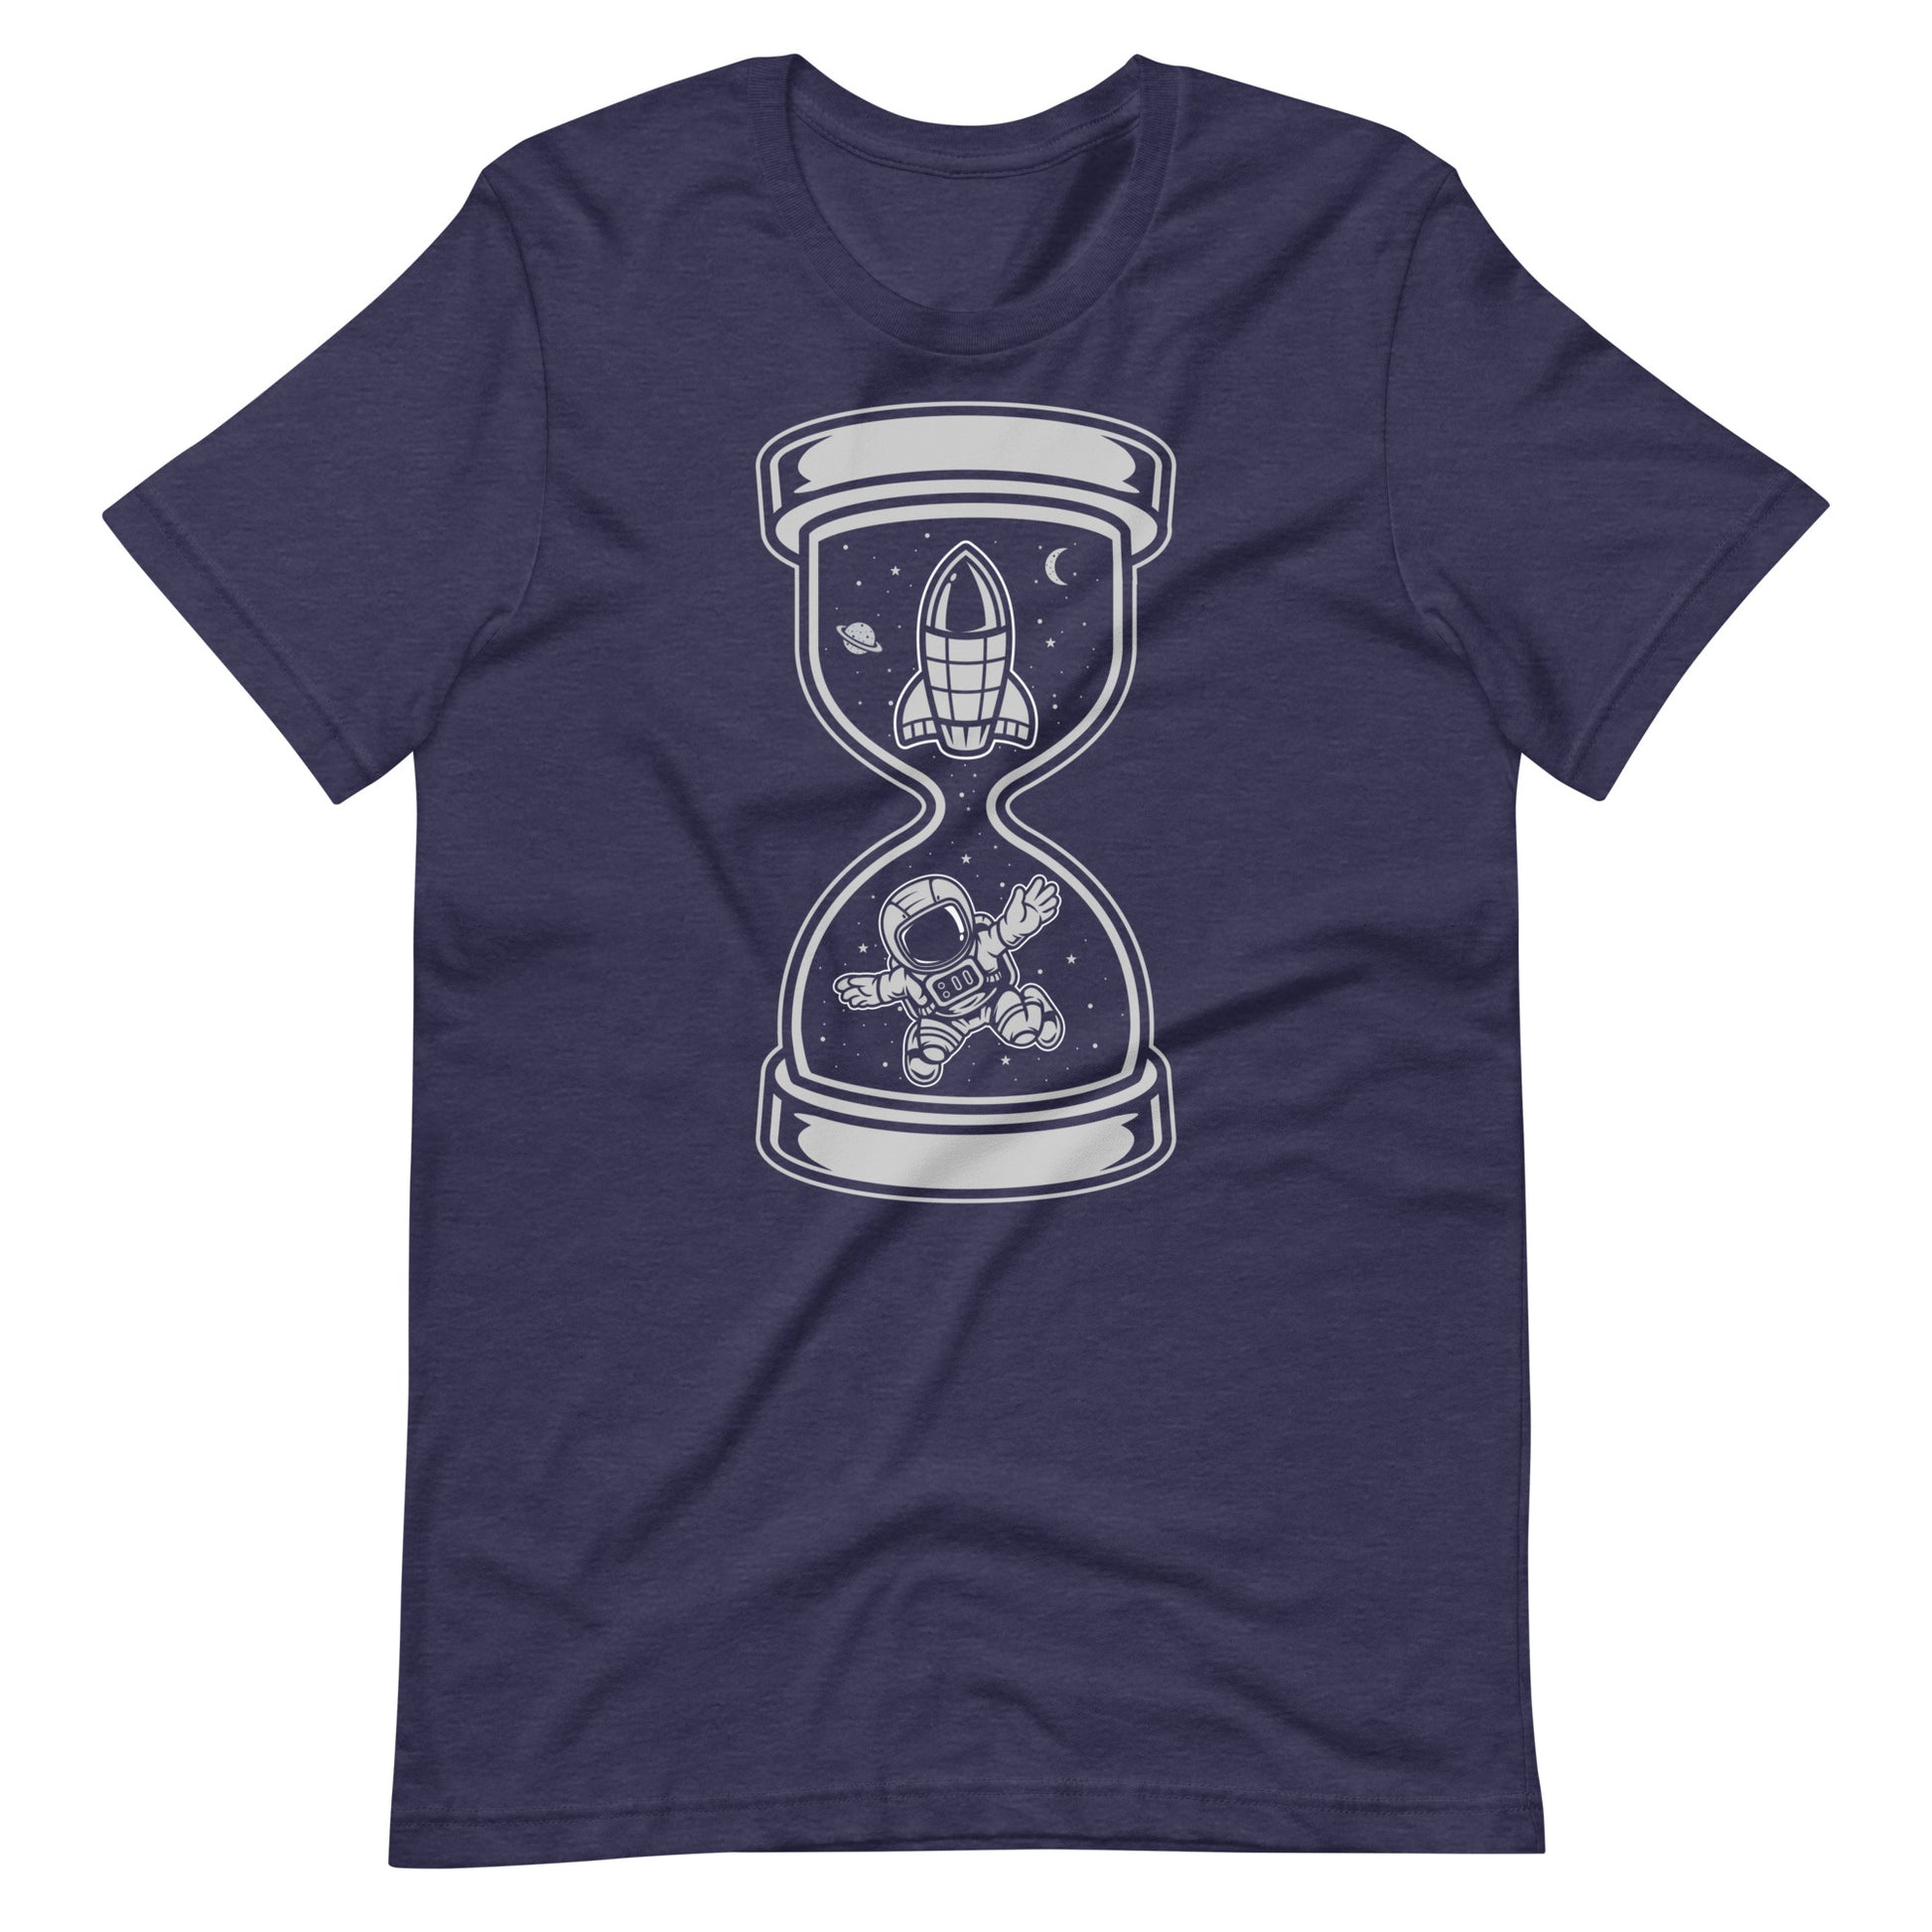 Astronaut Time - Men's t-shirt - Heather Midnight Navy Front